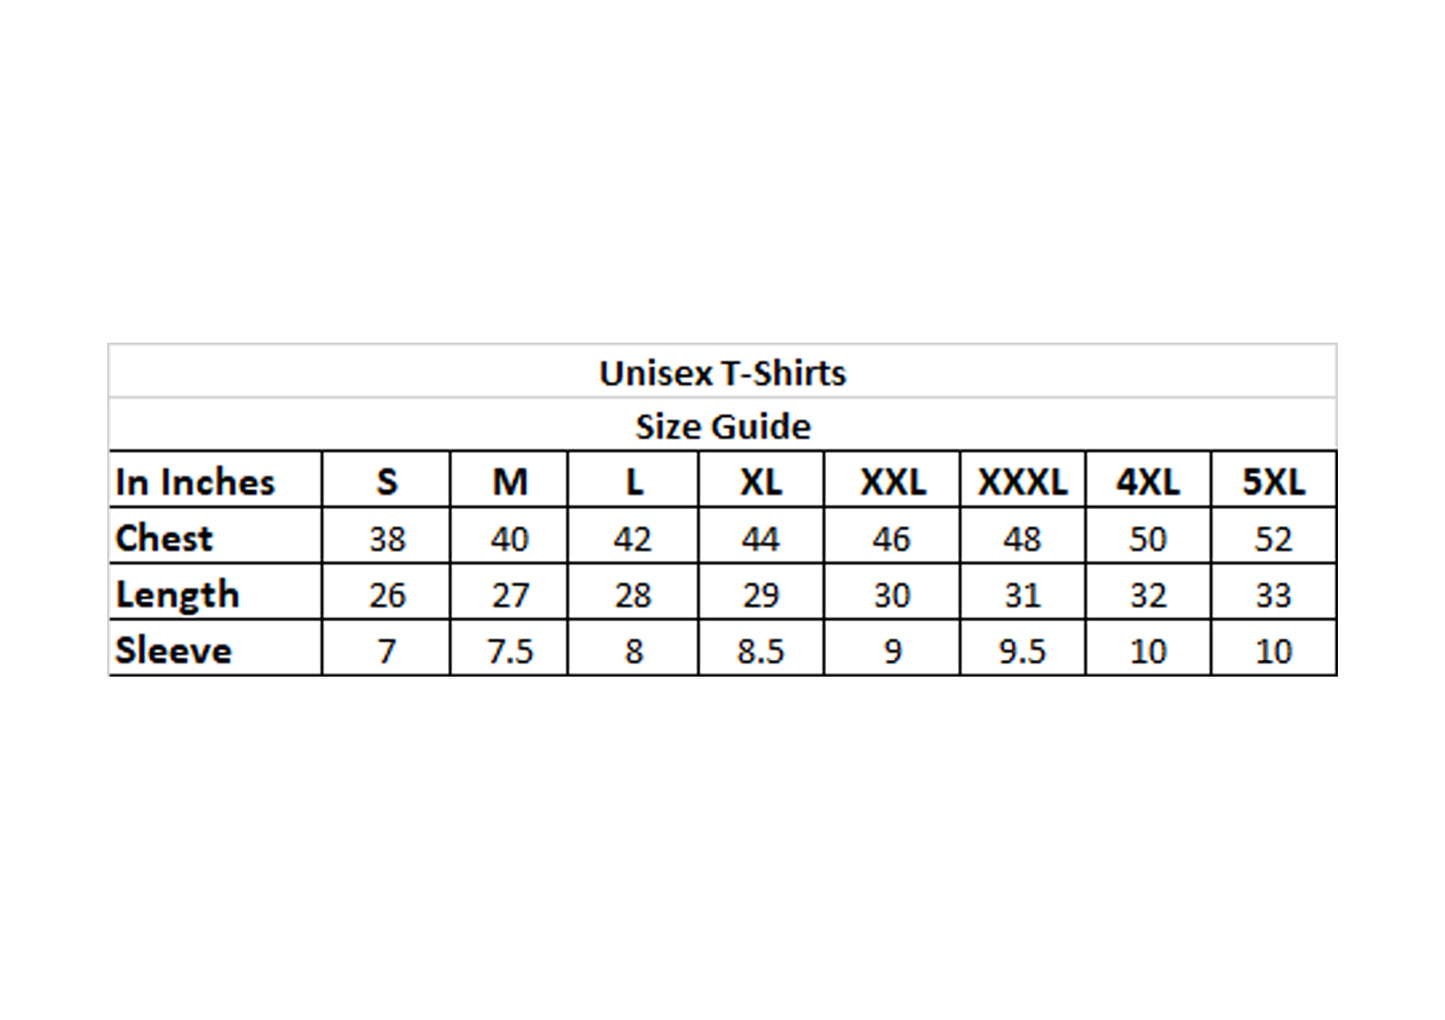 ALAND Seasons Unisex T-Shirt (Black)